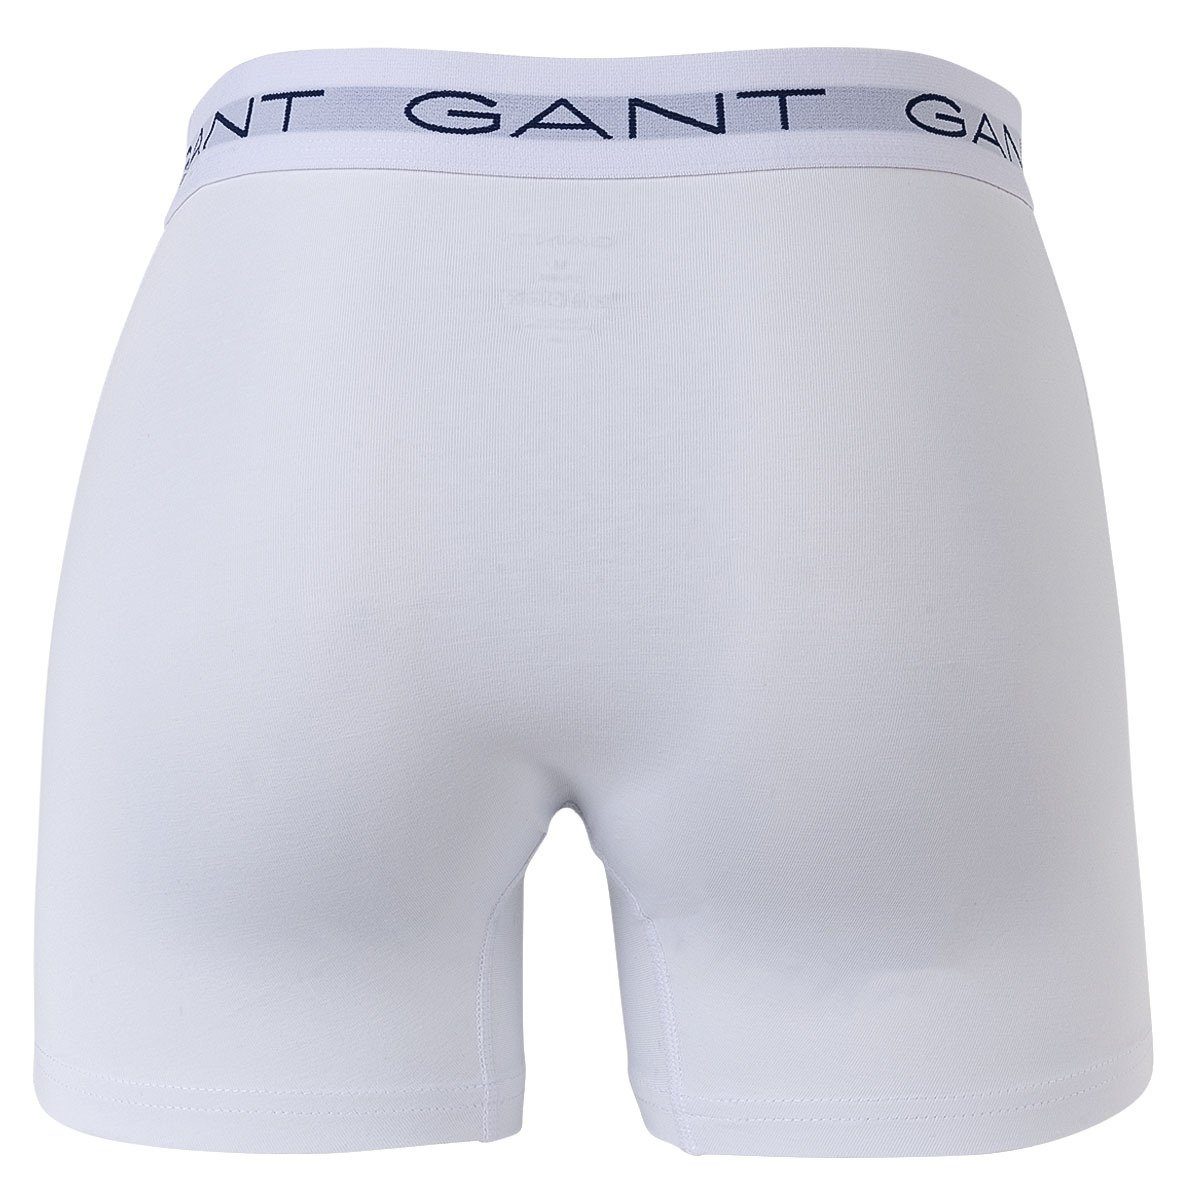 Shorts, 3er Gant Boxer Mehrfarbig Boxer Pack Briefs Herren - Boxer